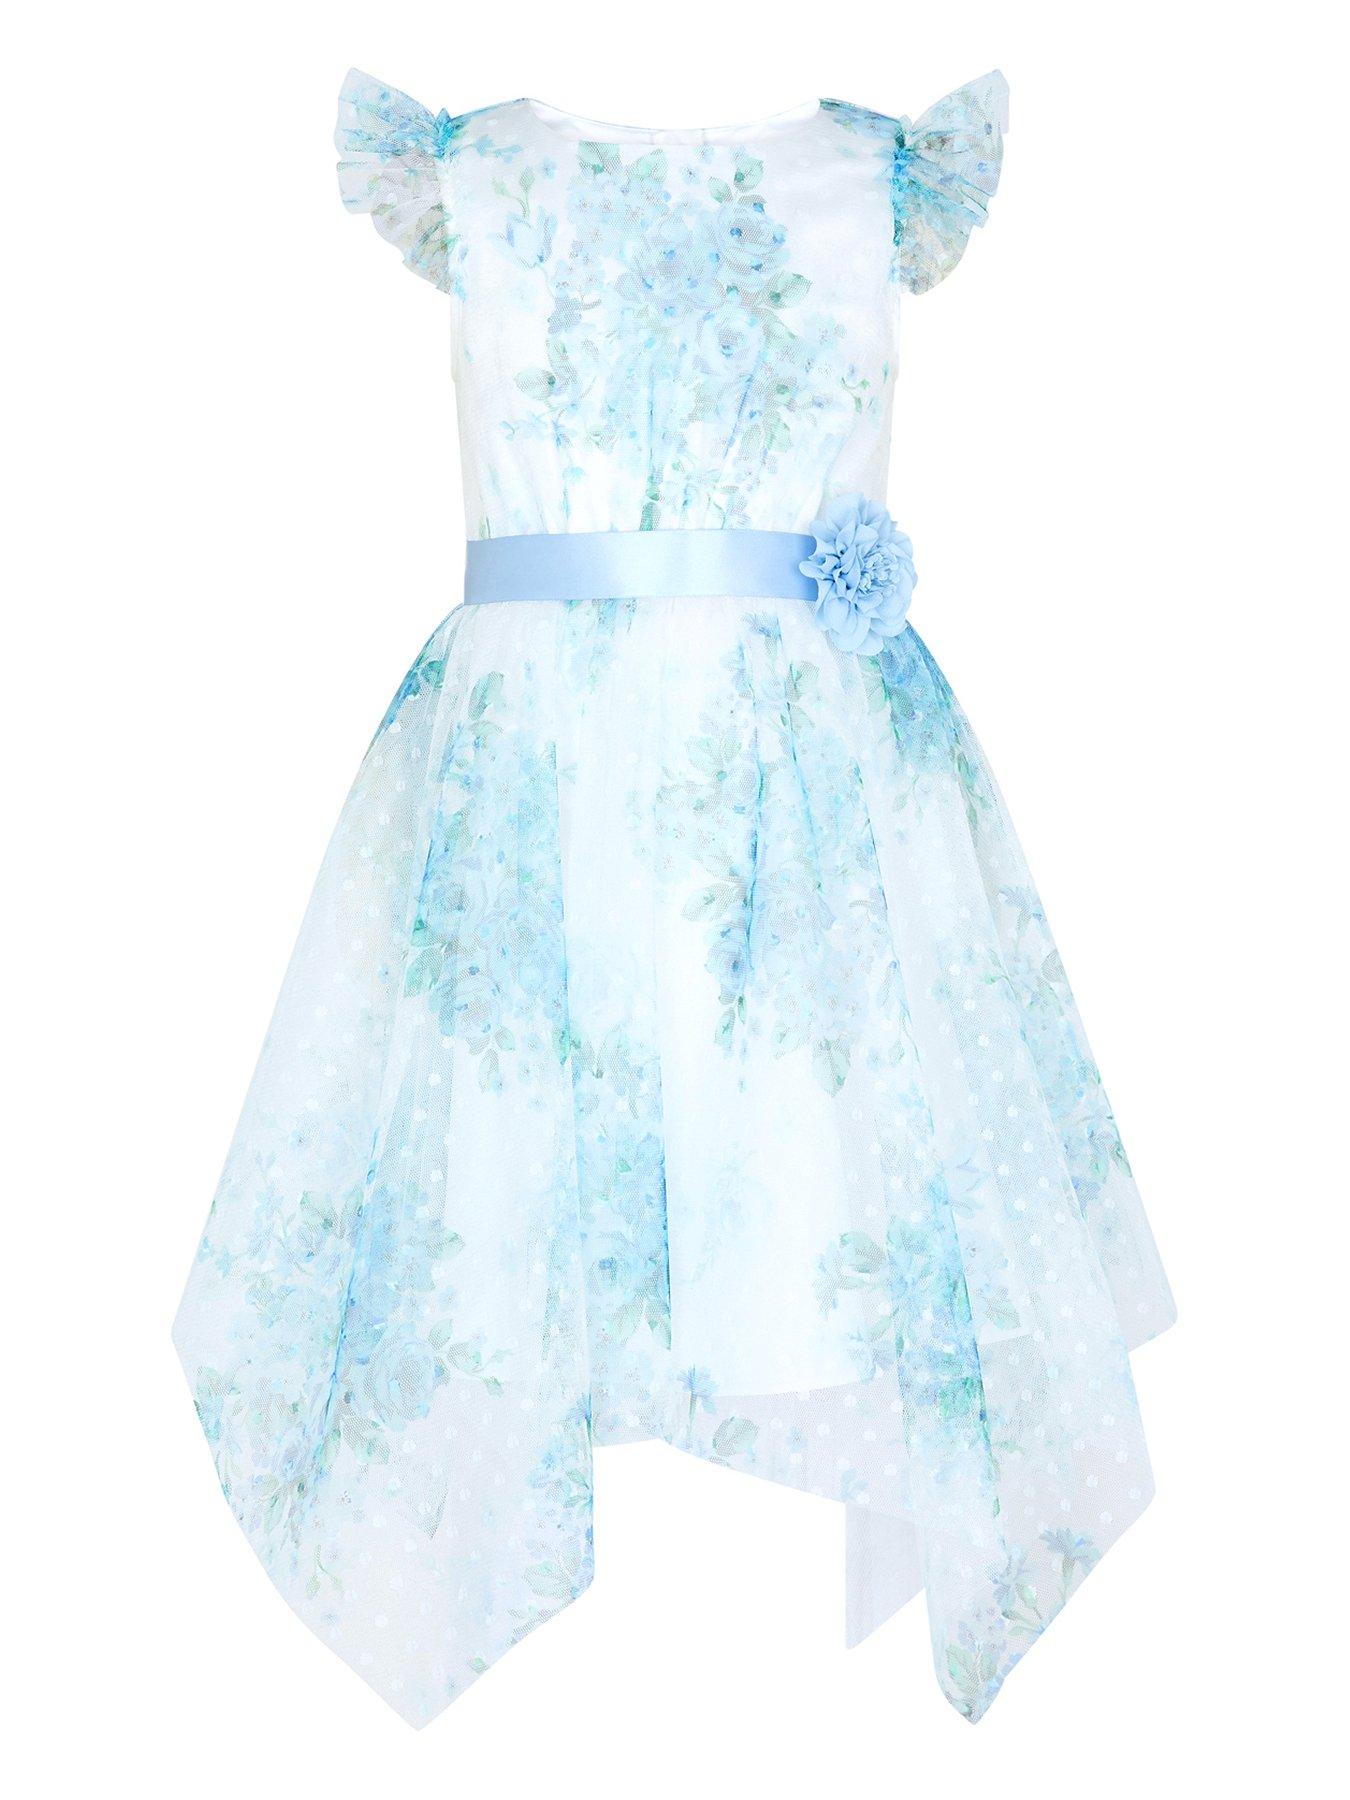  Girls Heidi Floral Print Tulle Dress - Blue